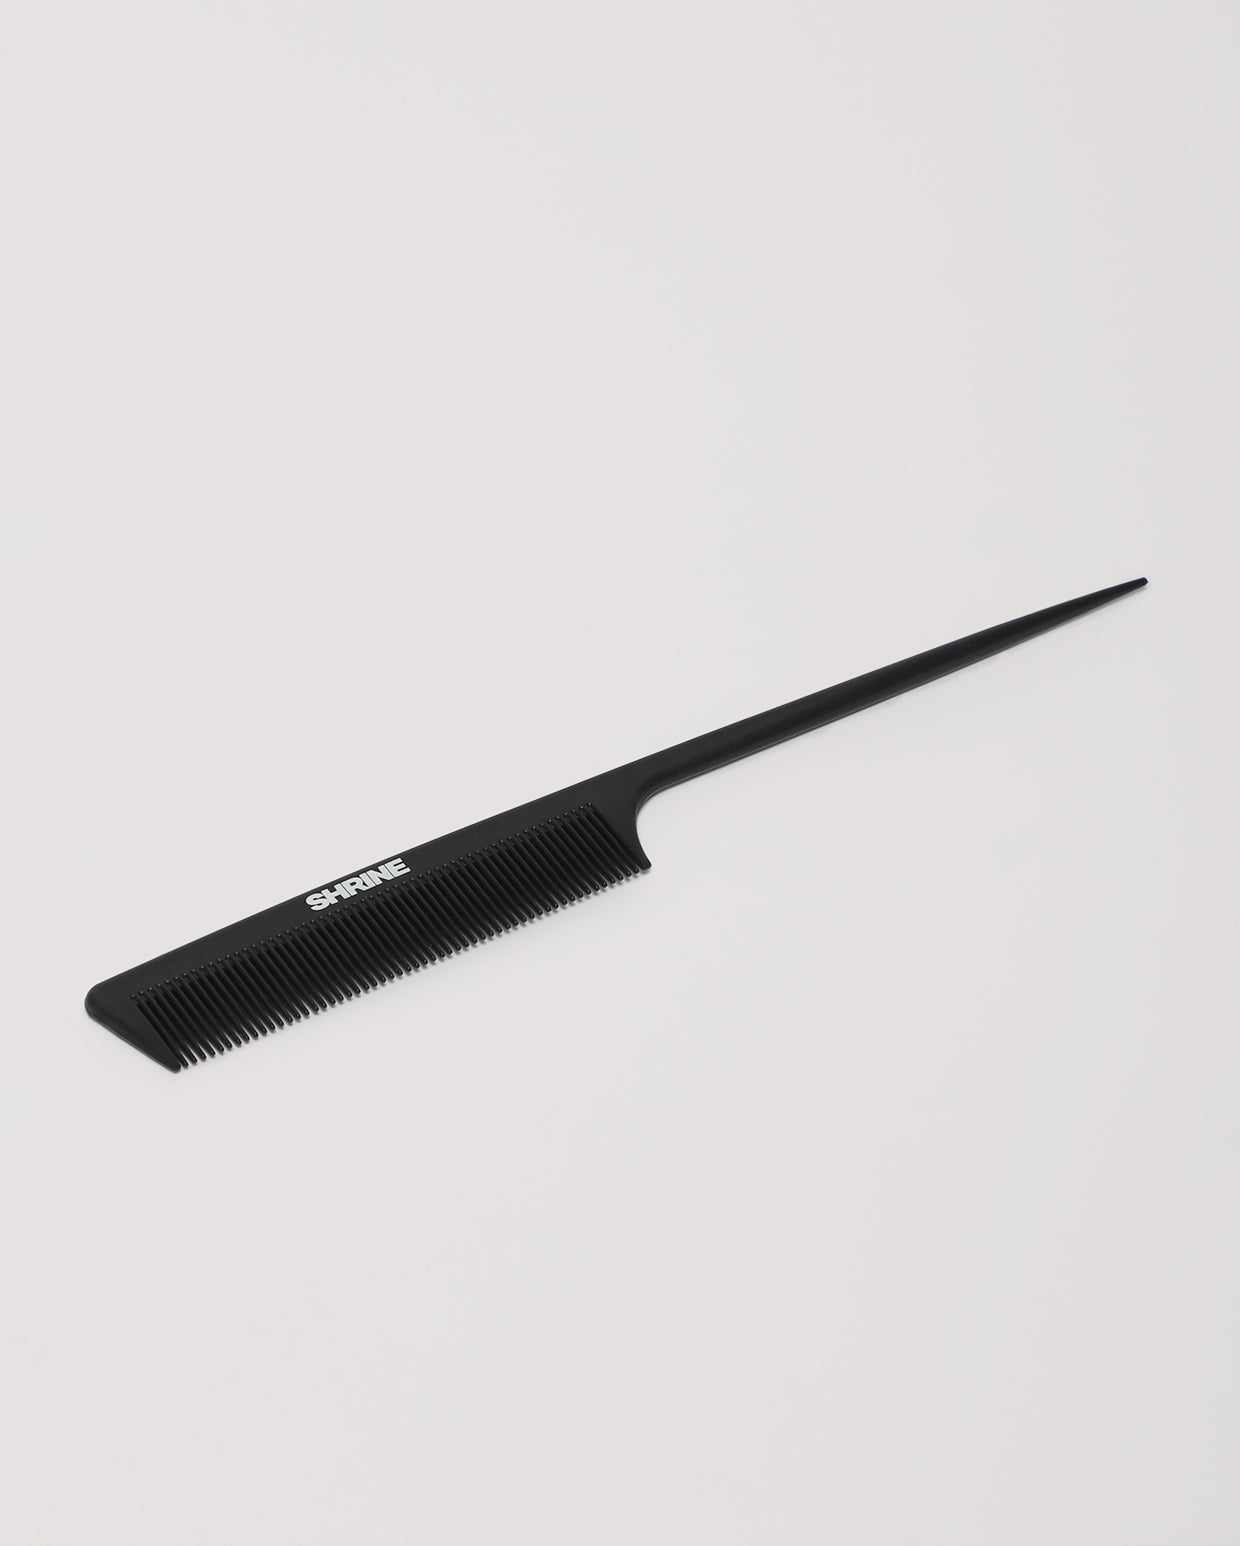 SHRINE Tail Comb